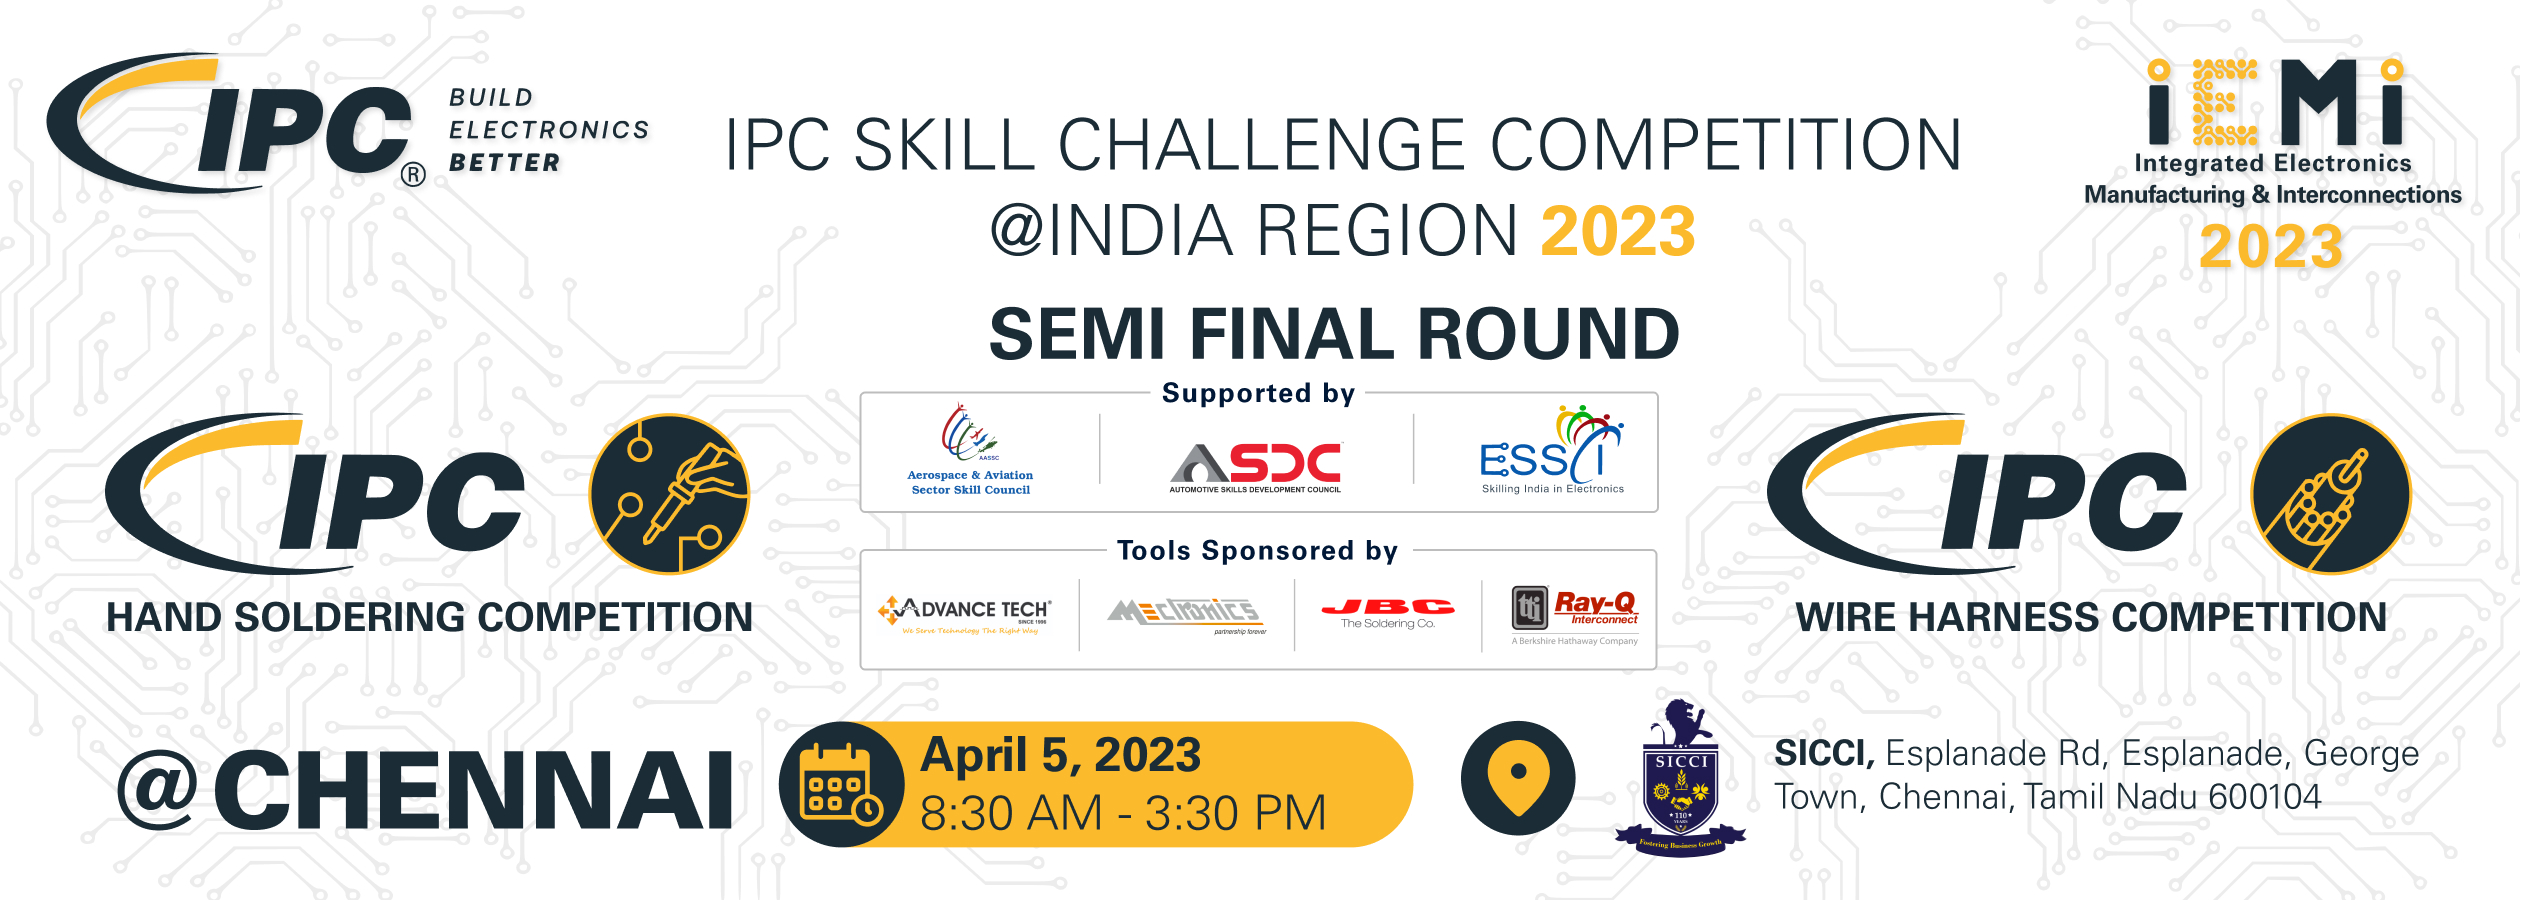 IPC skill Challenge Chennai 5 April banner 1680x600.jpg